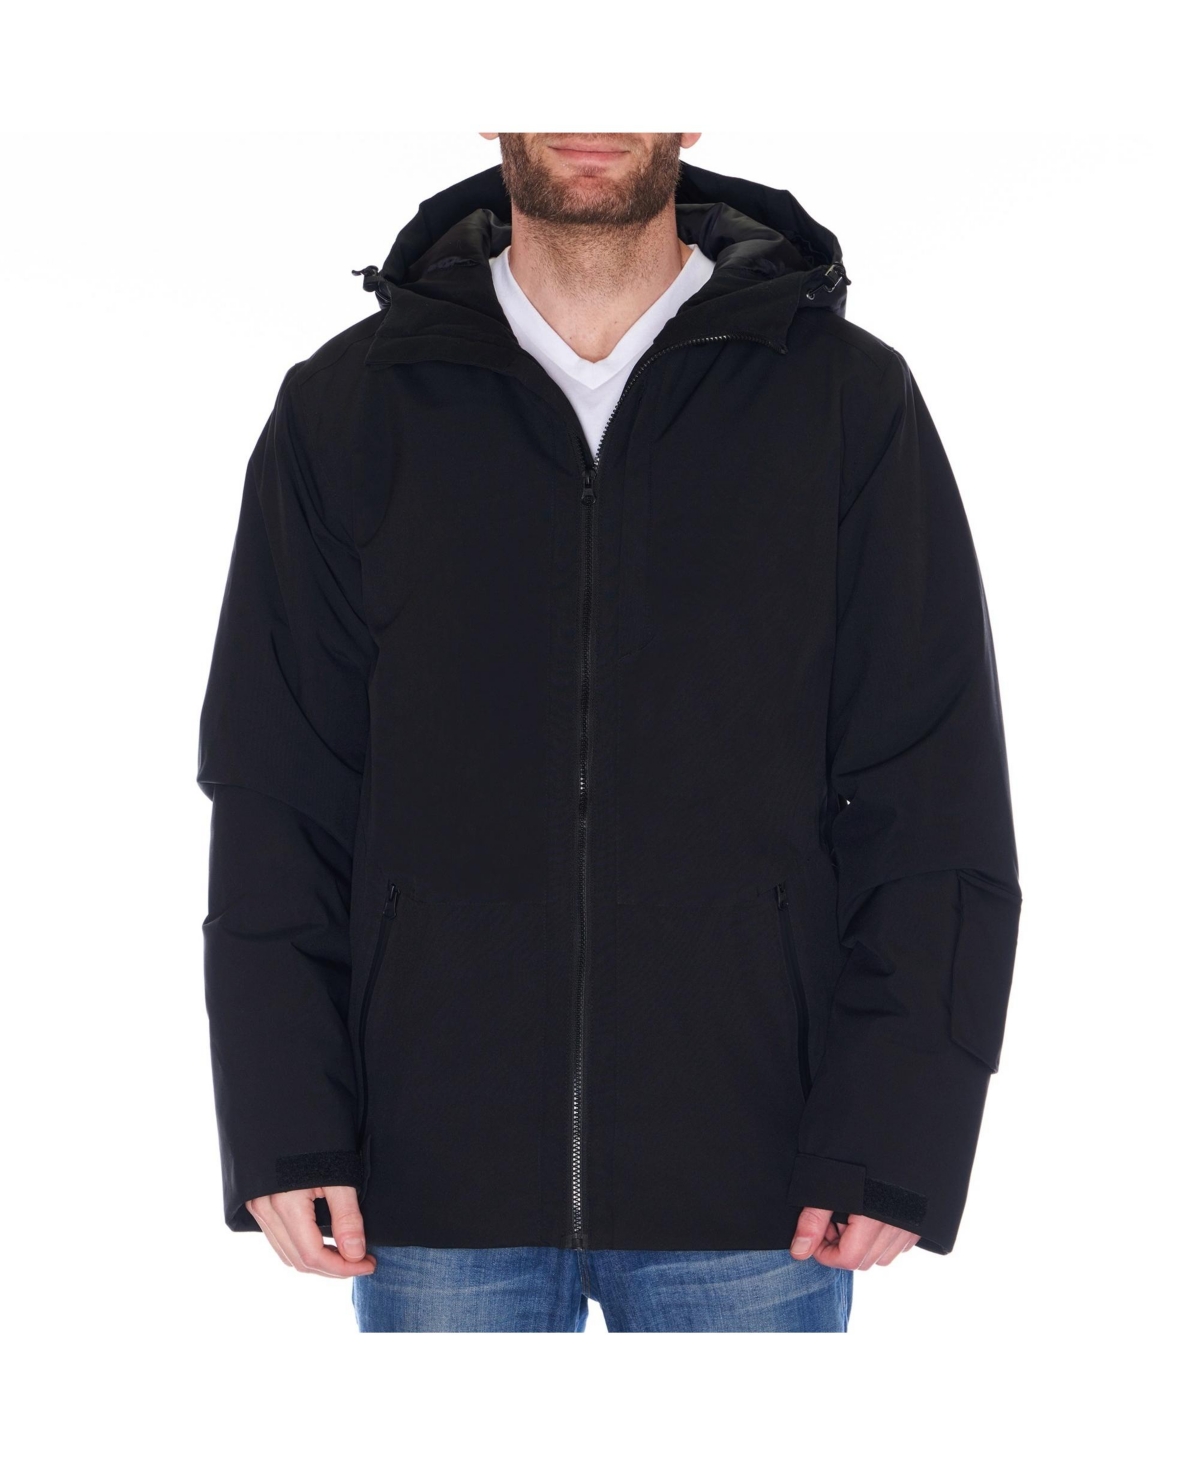 Mens Waterproof Ski Jacket Snowboarding Winter Snow Coat Raincoat - Black charcoal